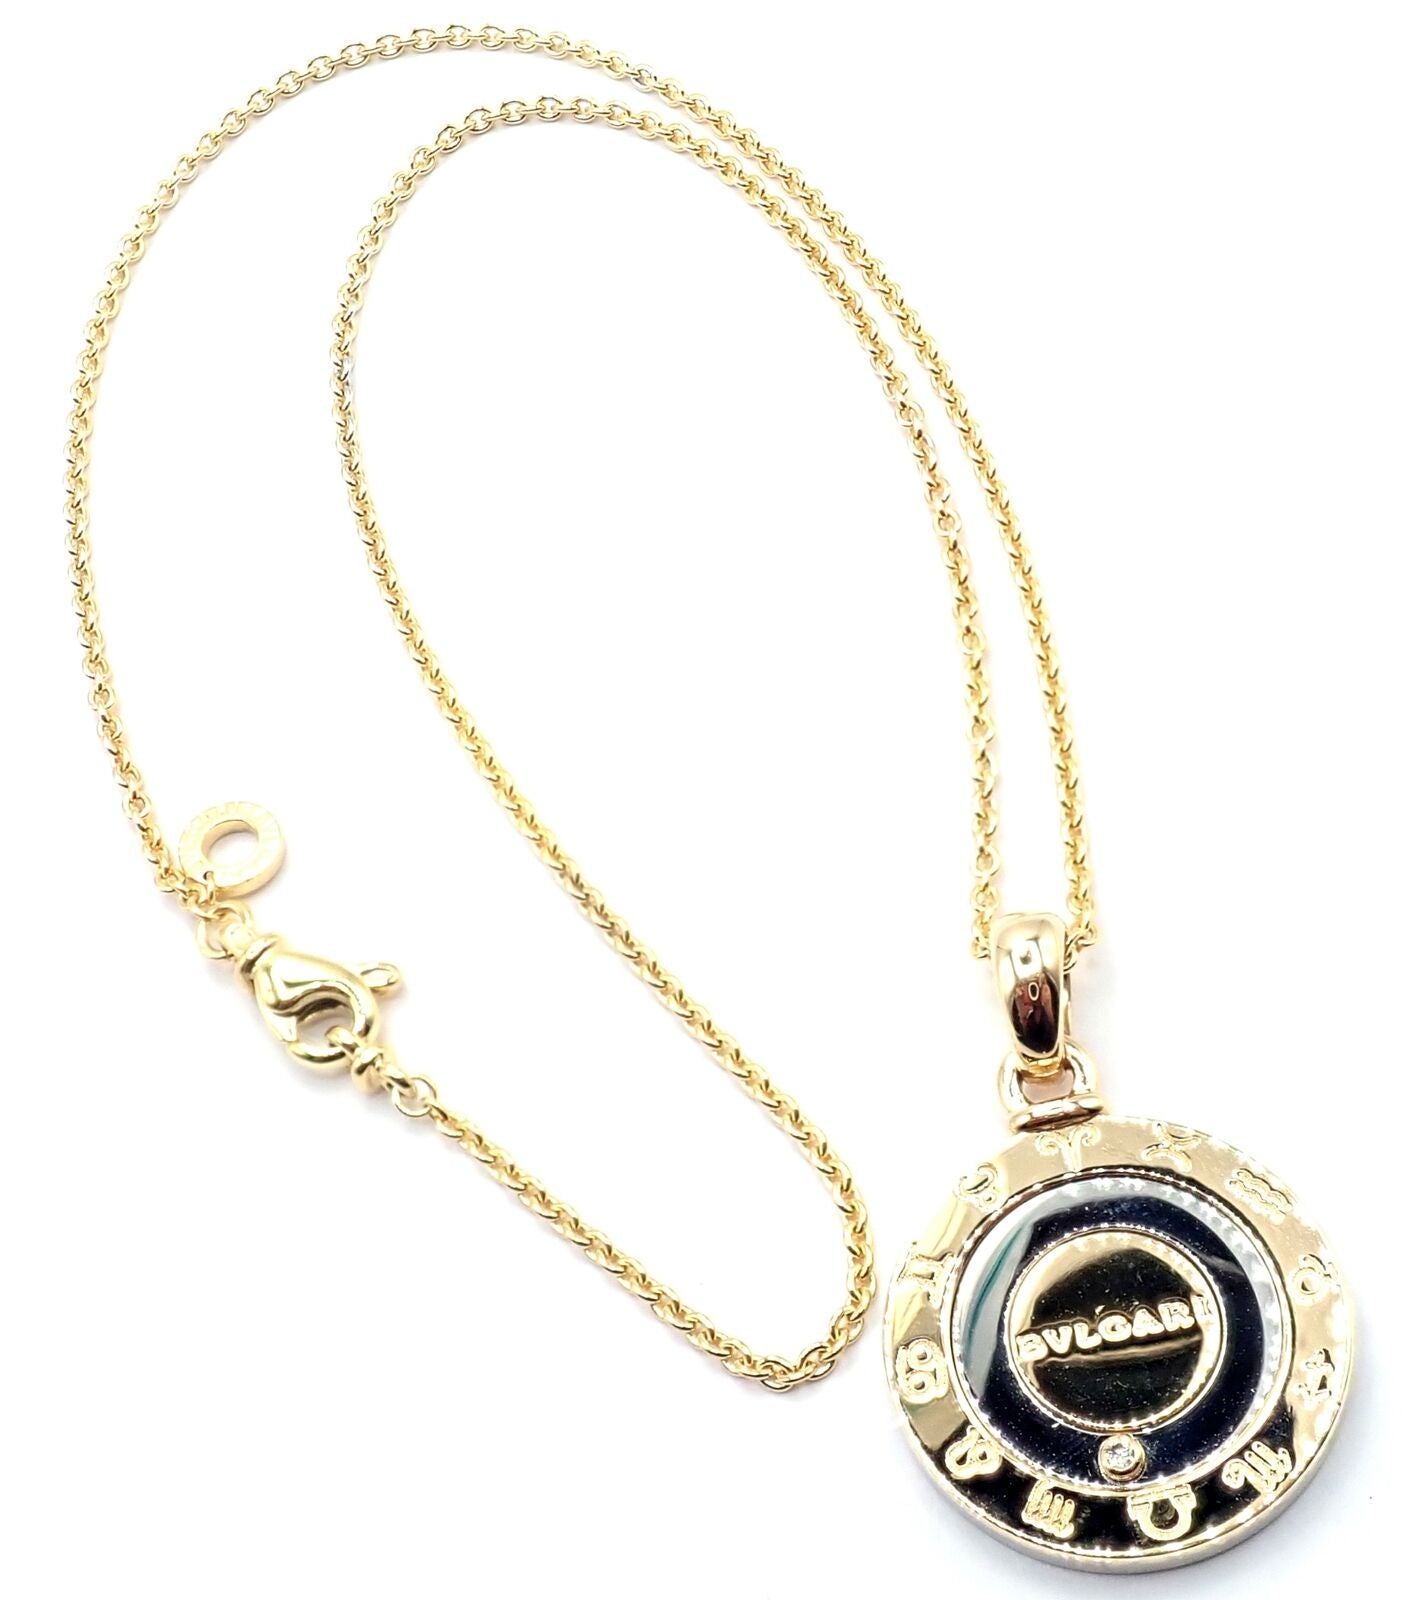 Chanel Citrine Gold Clover Pendant Necklace